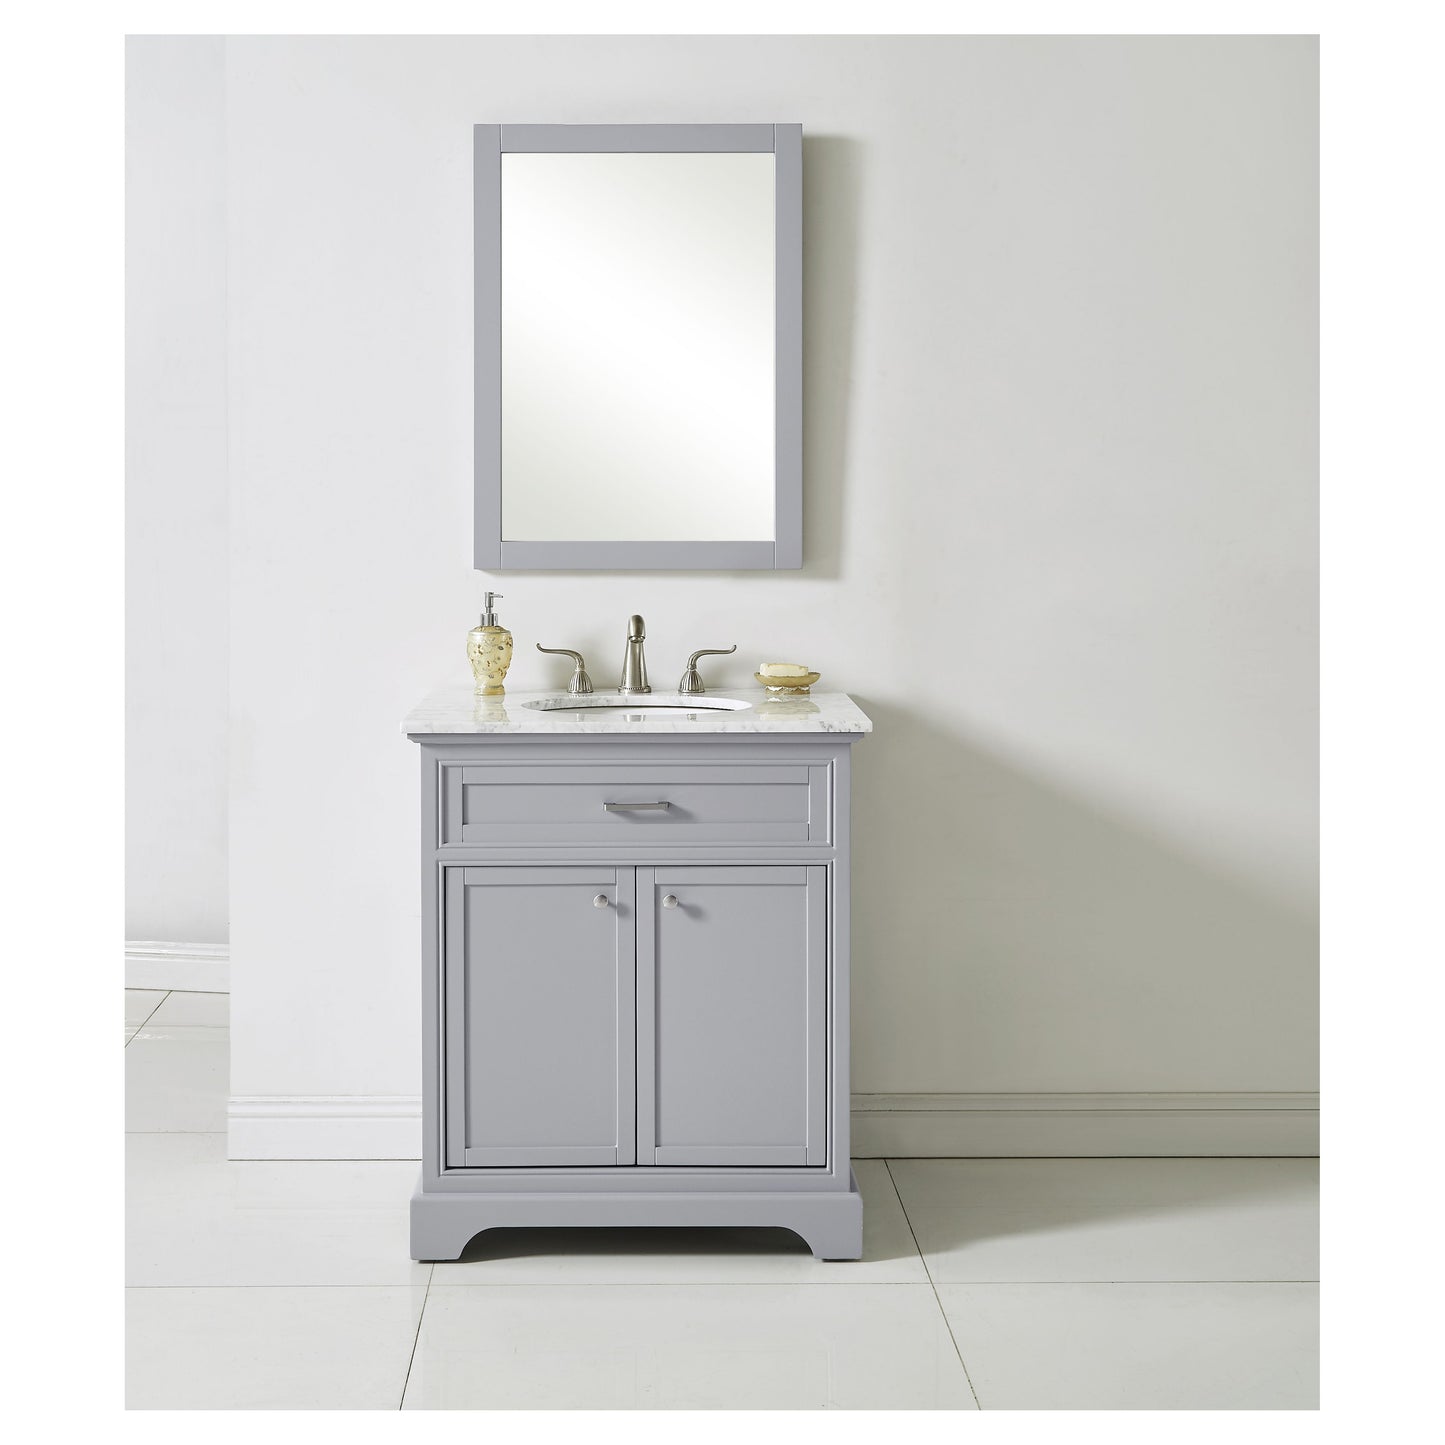 VF15030GR 30" Single Bathroom Vanity Set in Light Grey